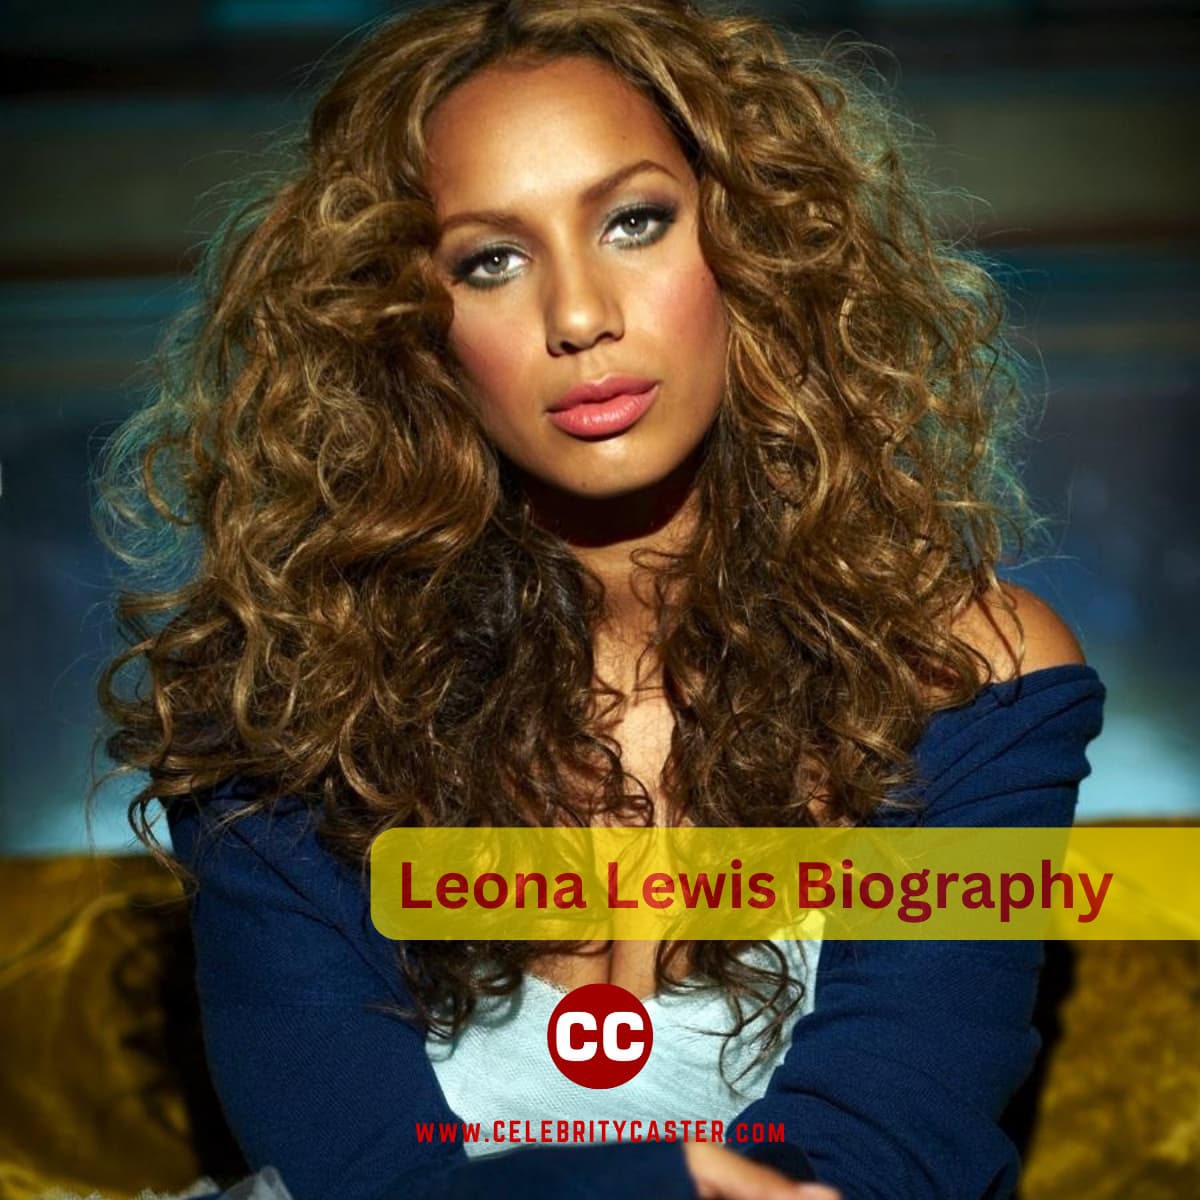 Leona Lewis Biography